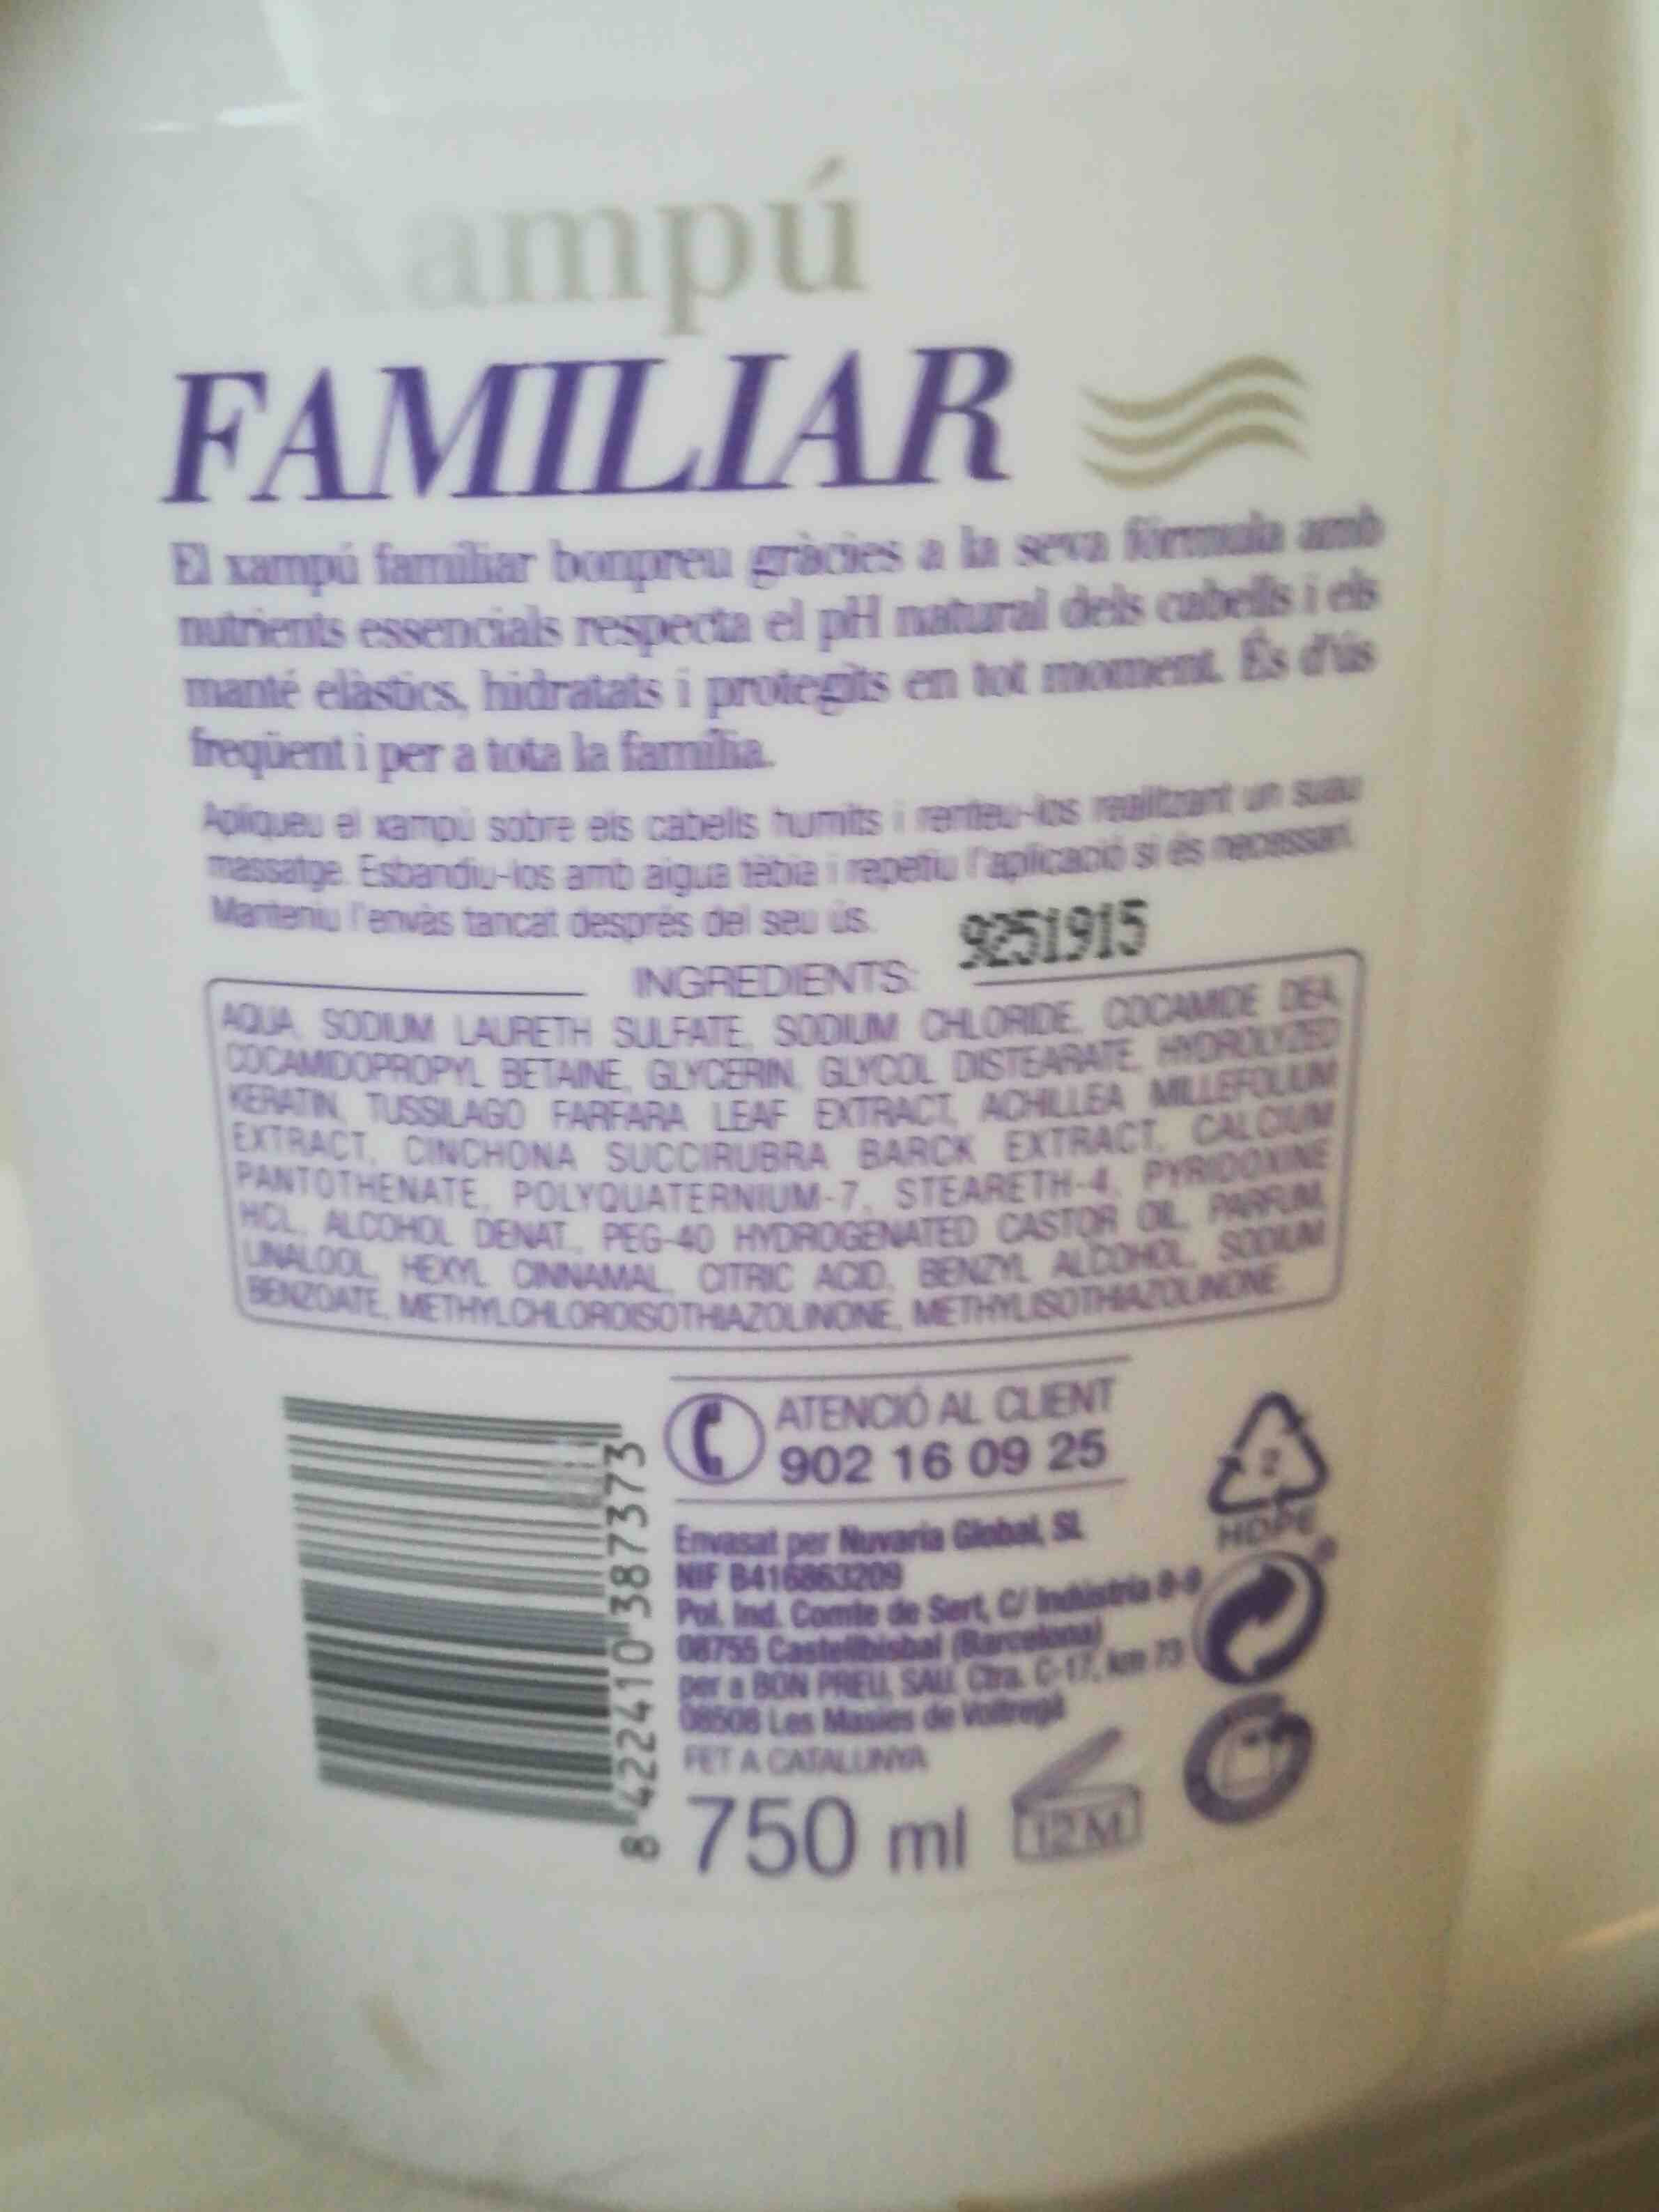 Xampu familiar bon preu - Inhaltsstoffe - en